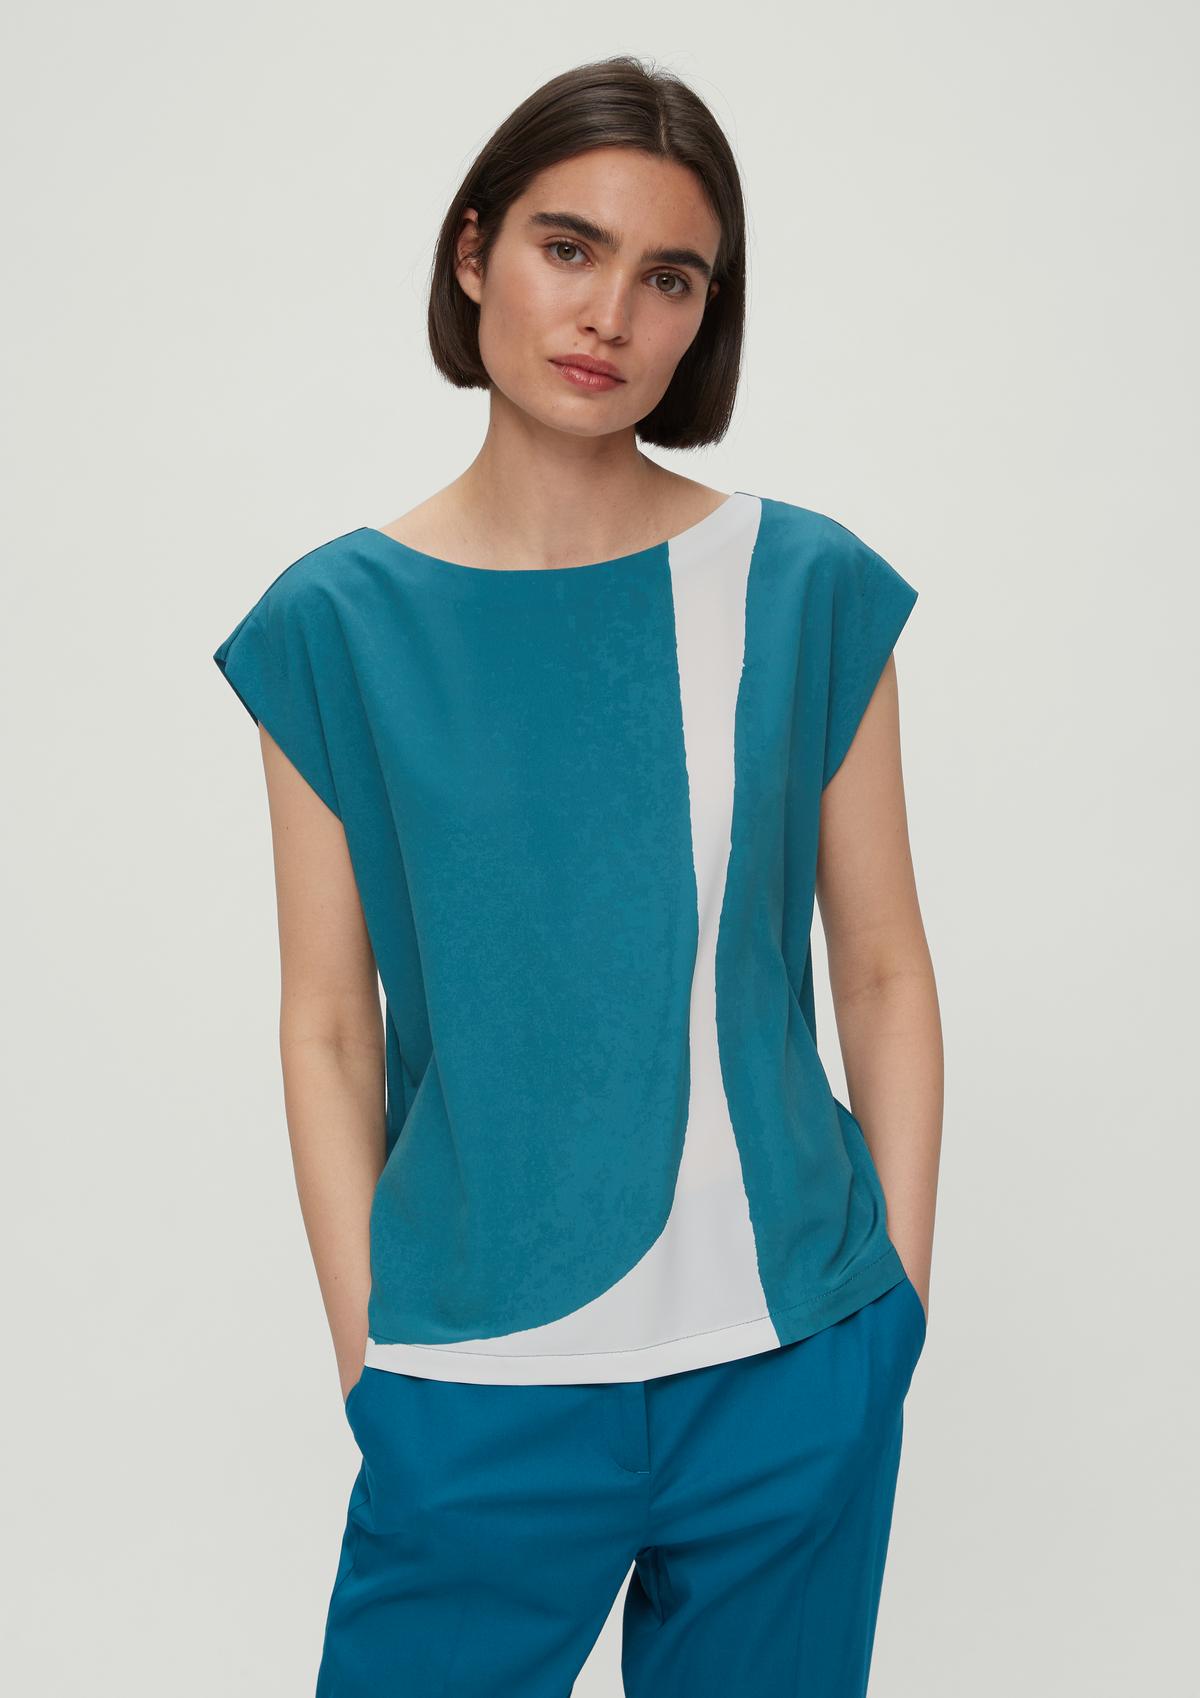 Mixed fabric blouse top